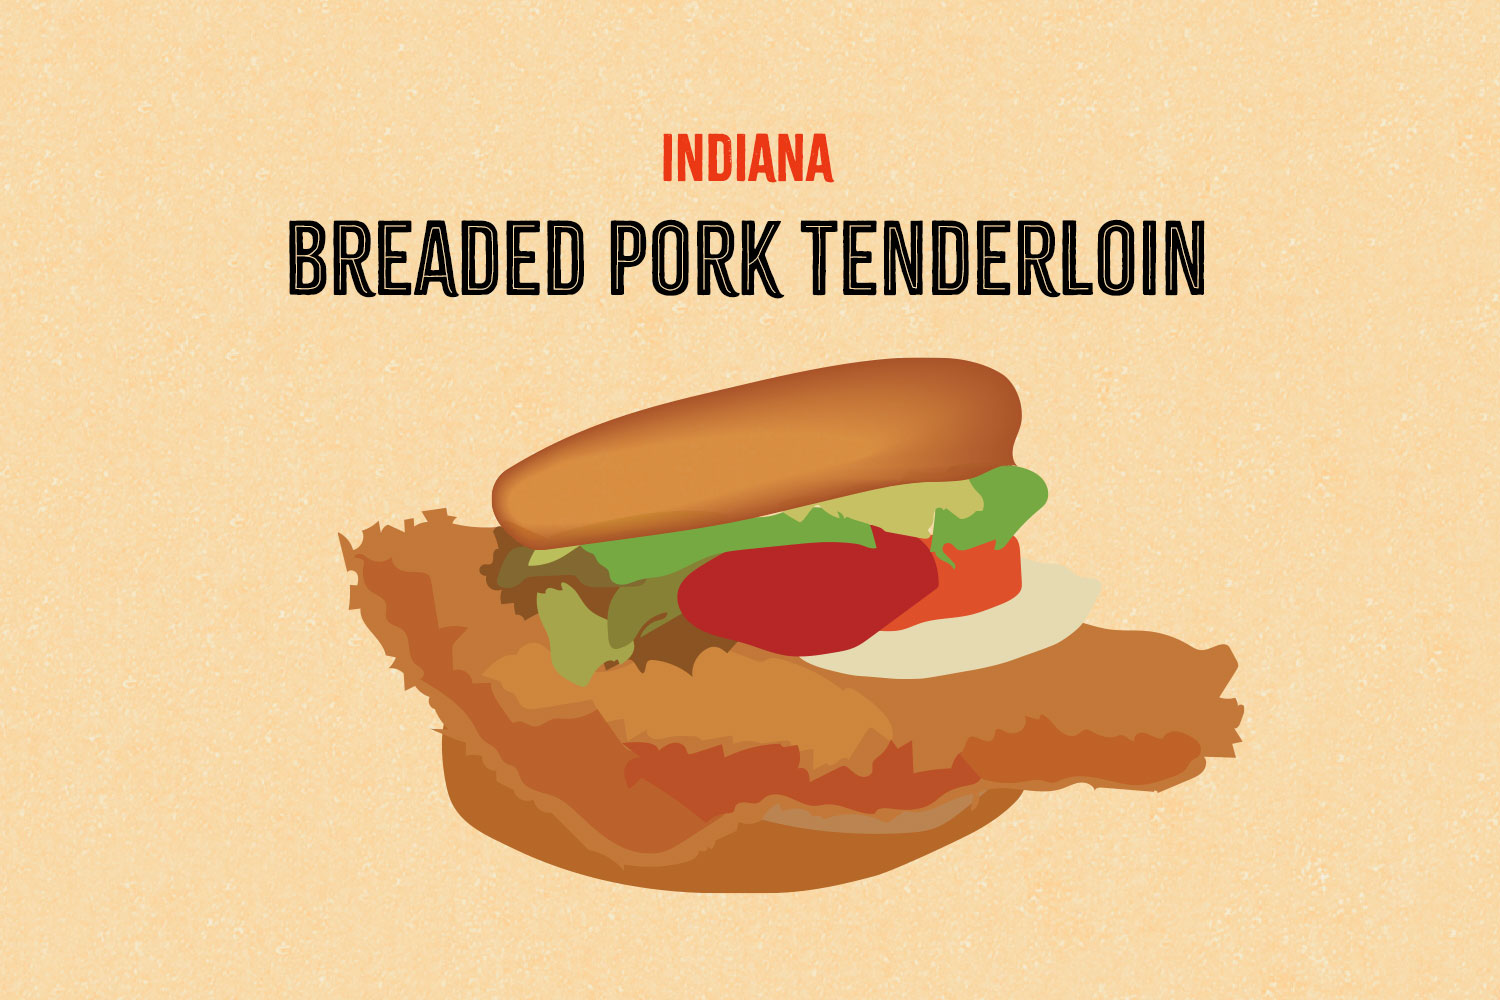 Breaded Pork Tenderloin illustration